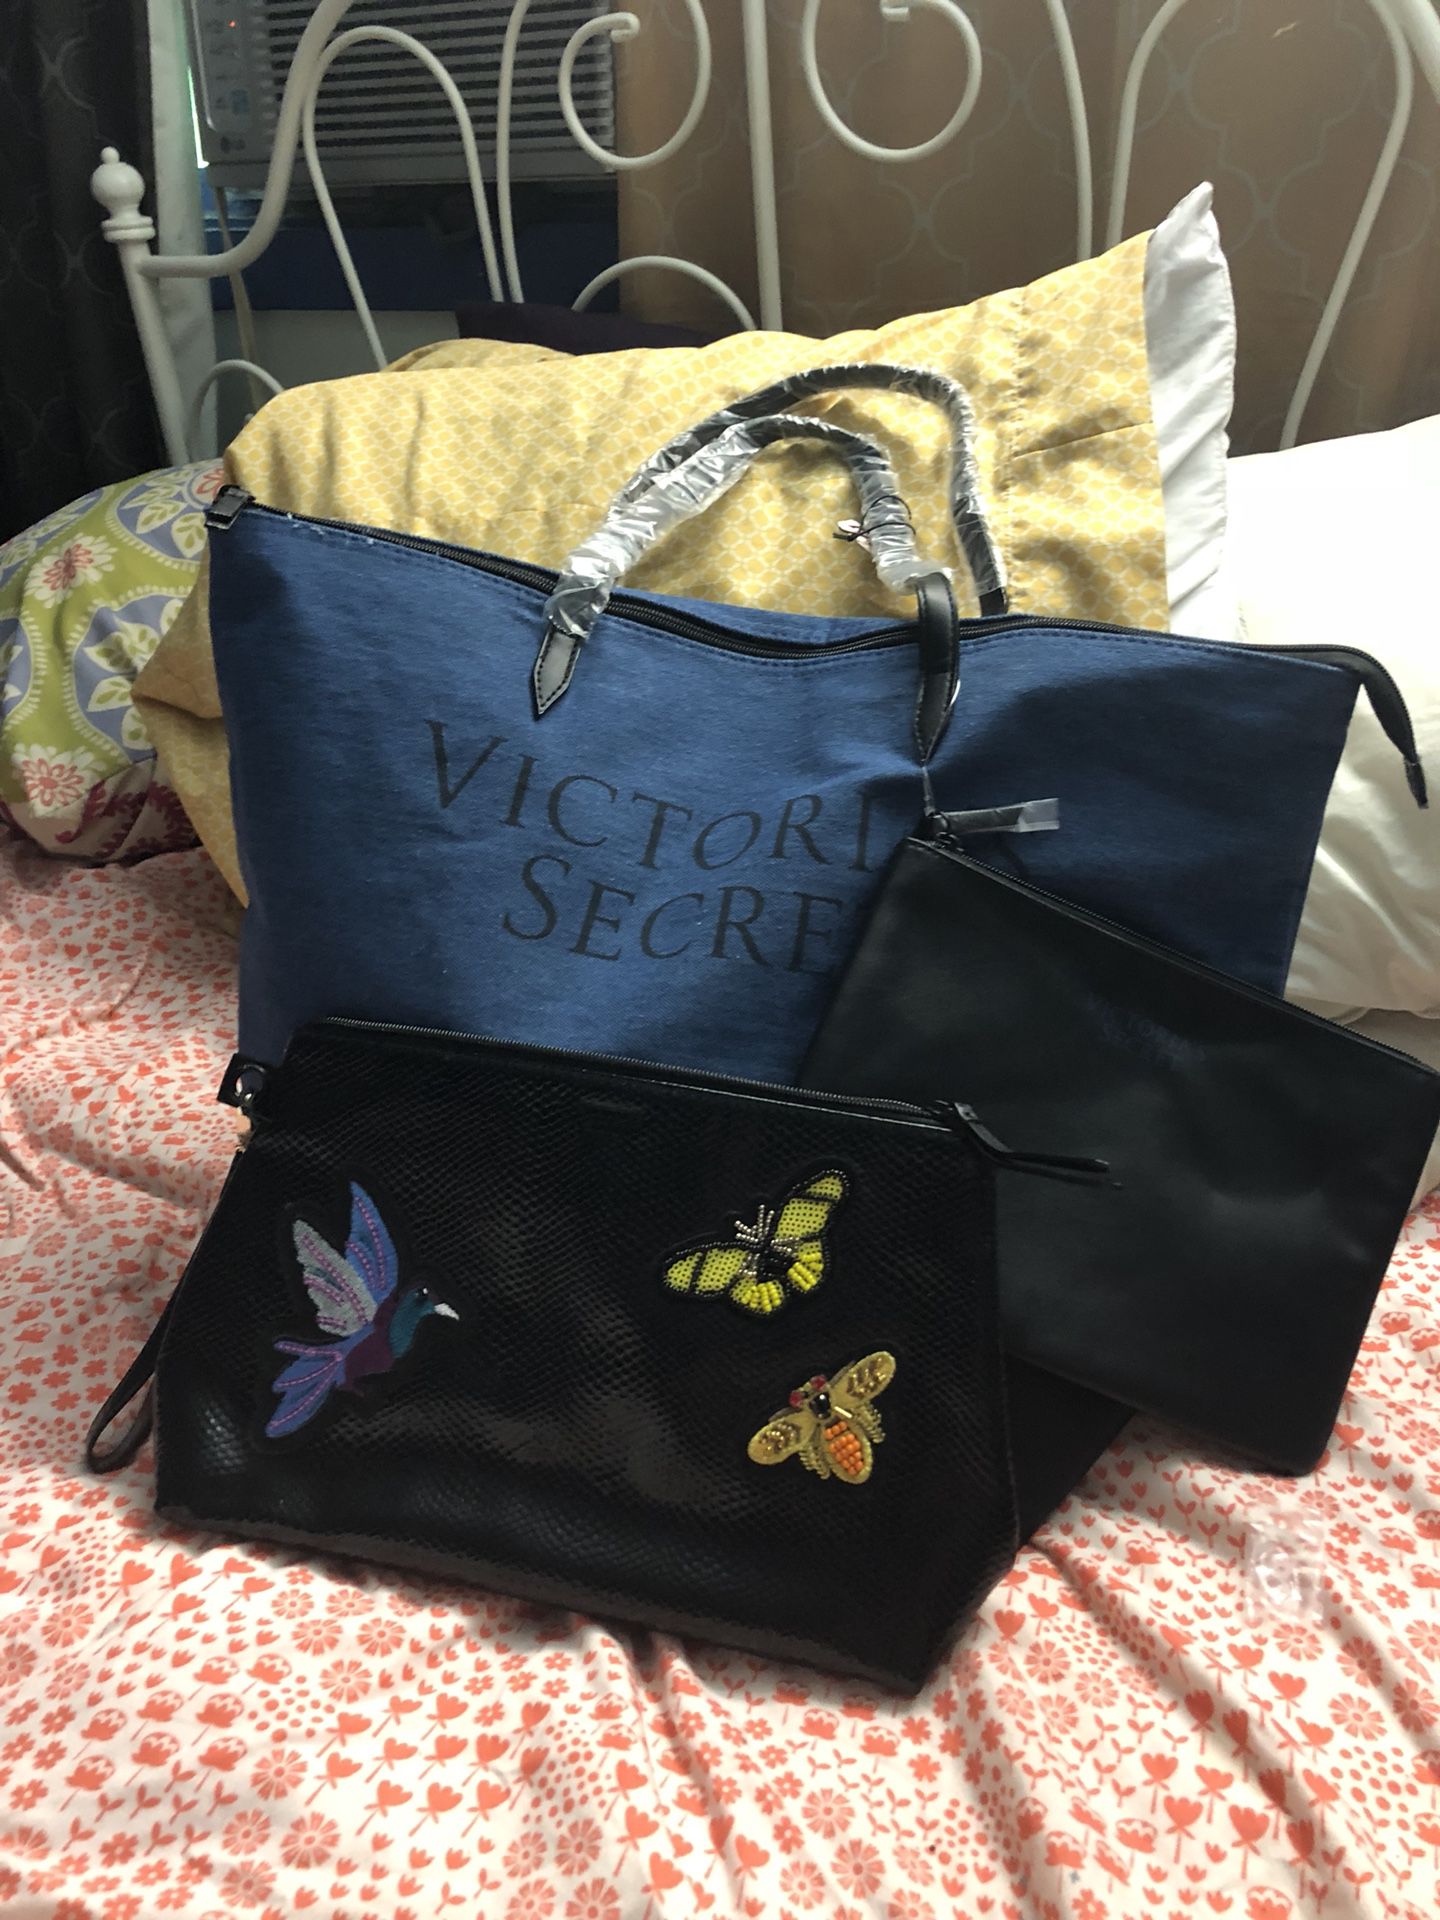 Gorgeous Victoria’s Secret tote